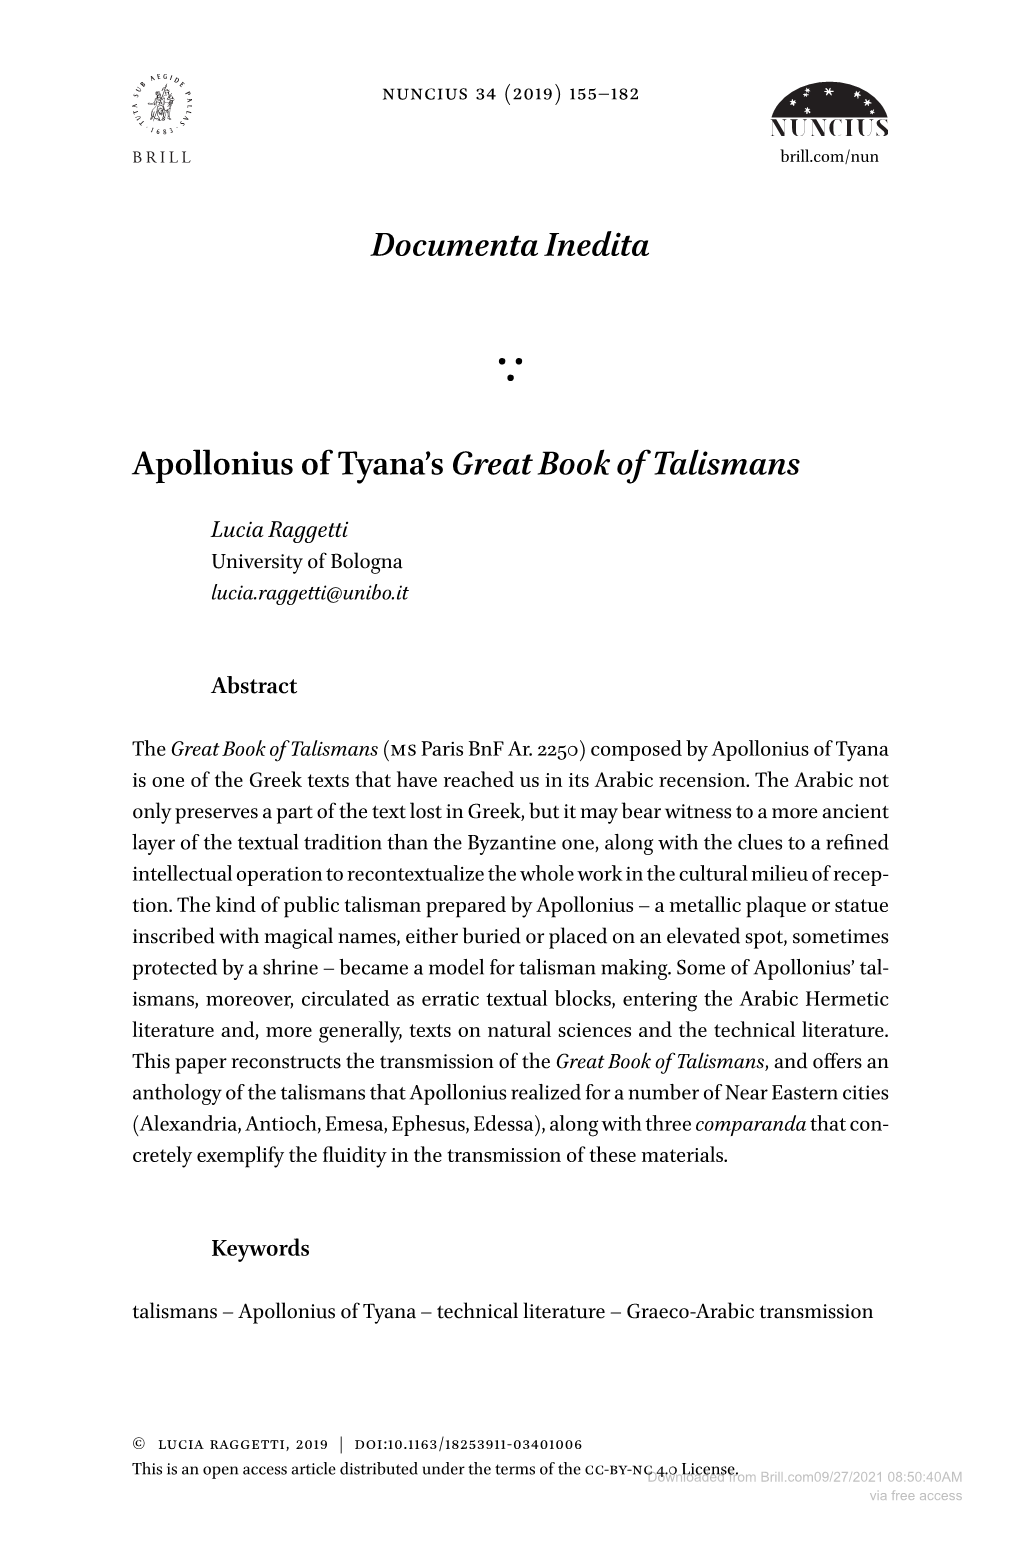 Documentainedita Apollonius of Tyana's Greatbookof Talismans